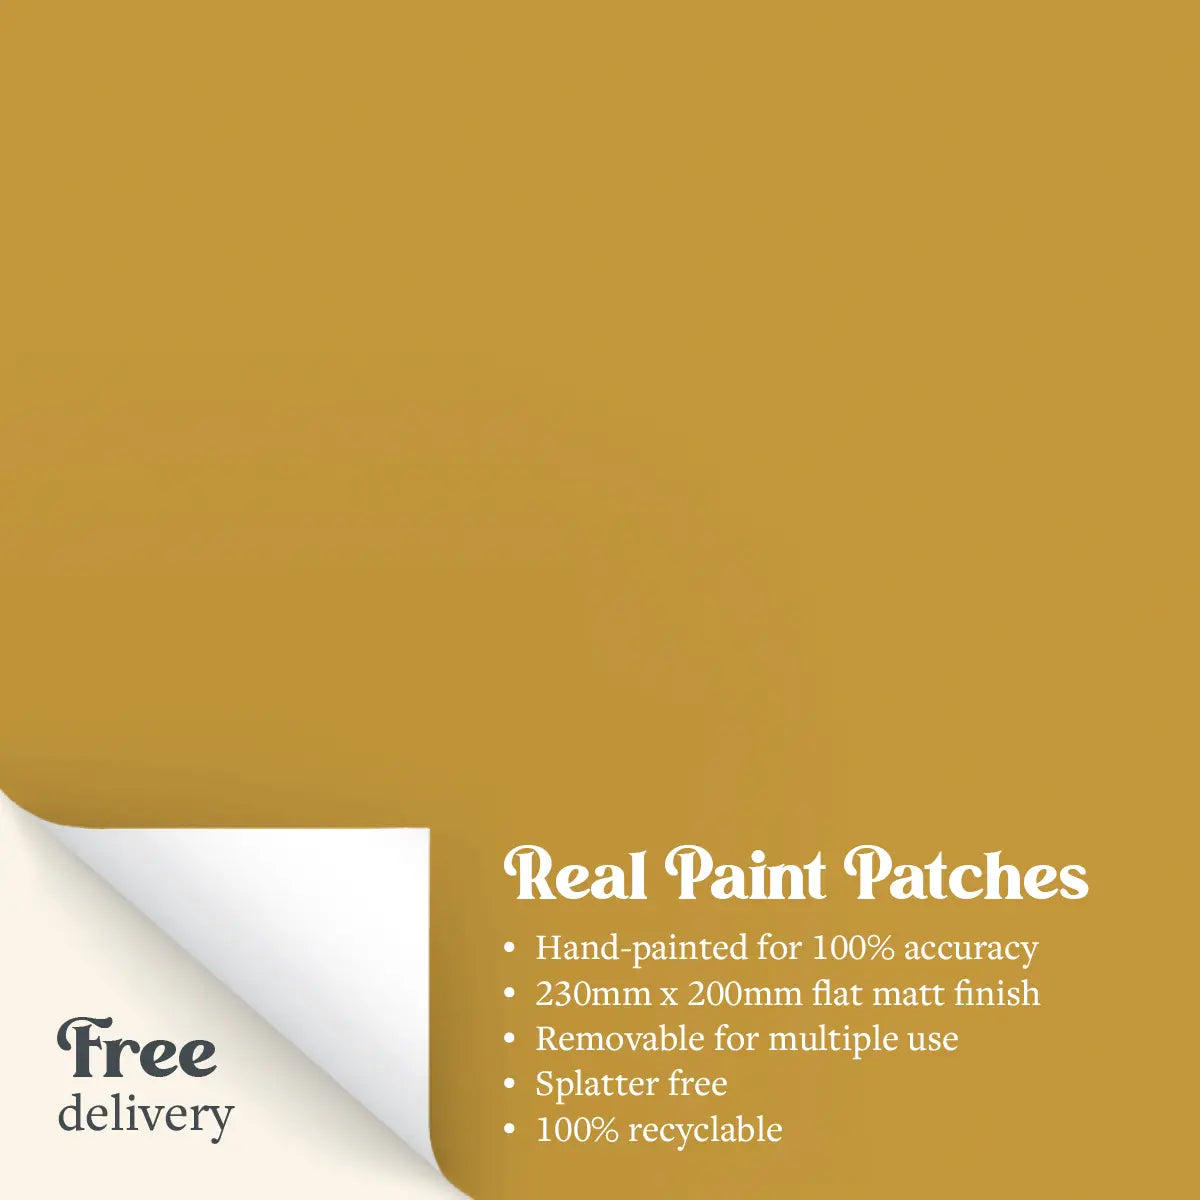 A Real Paint Patch of Zhoosh Paints' Sundowner yellow paint.